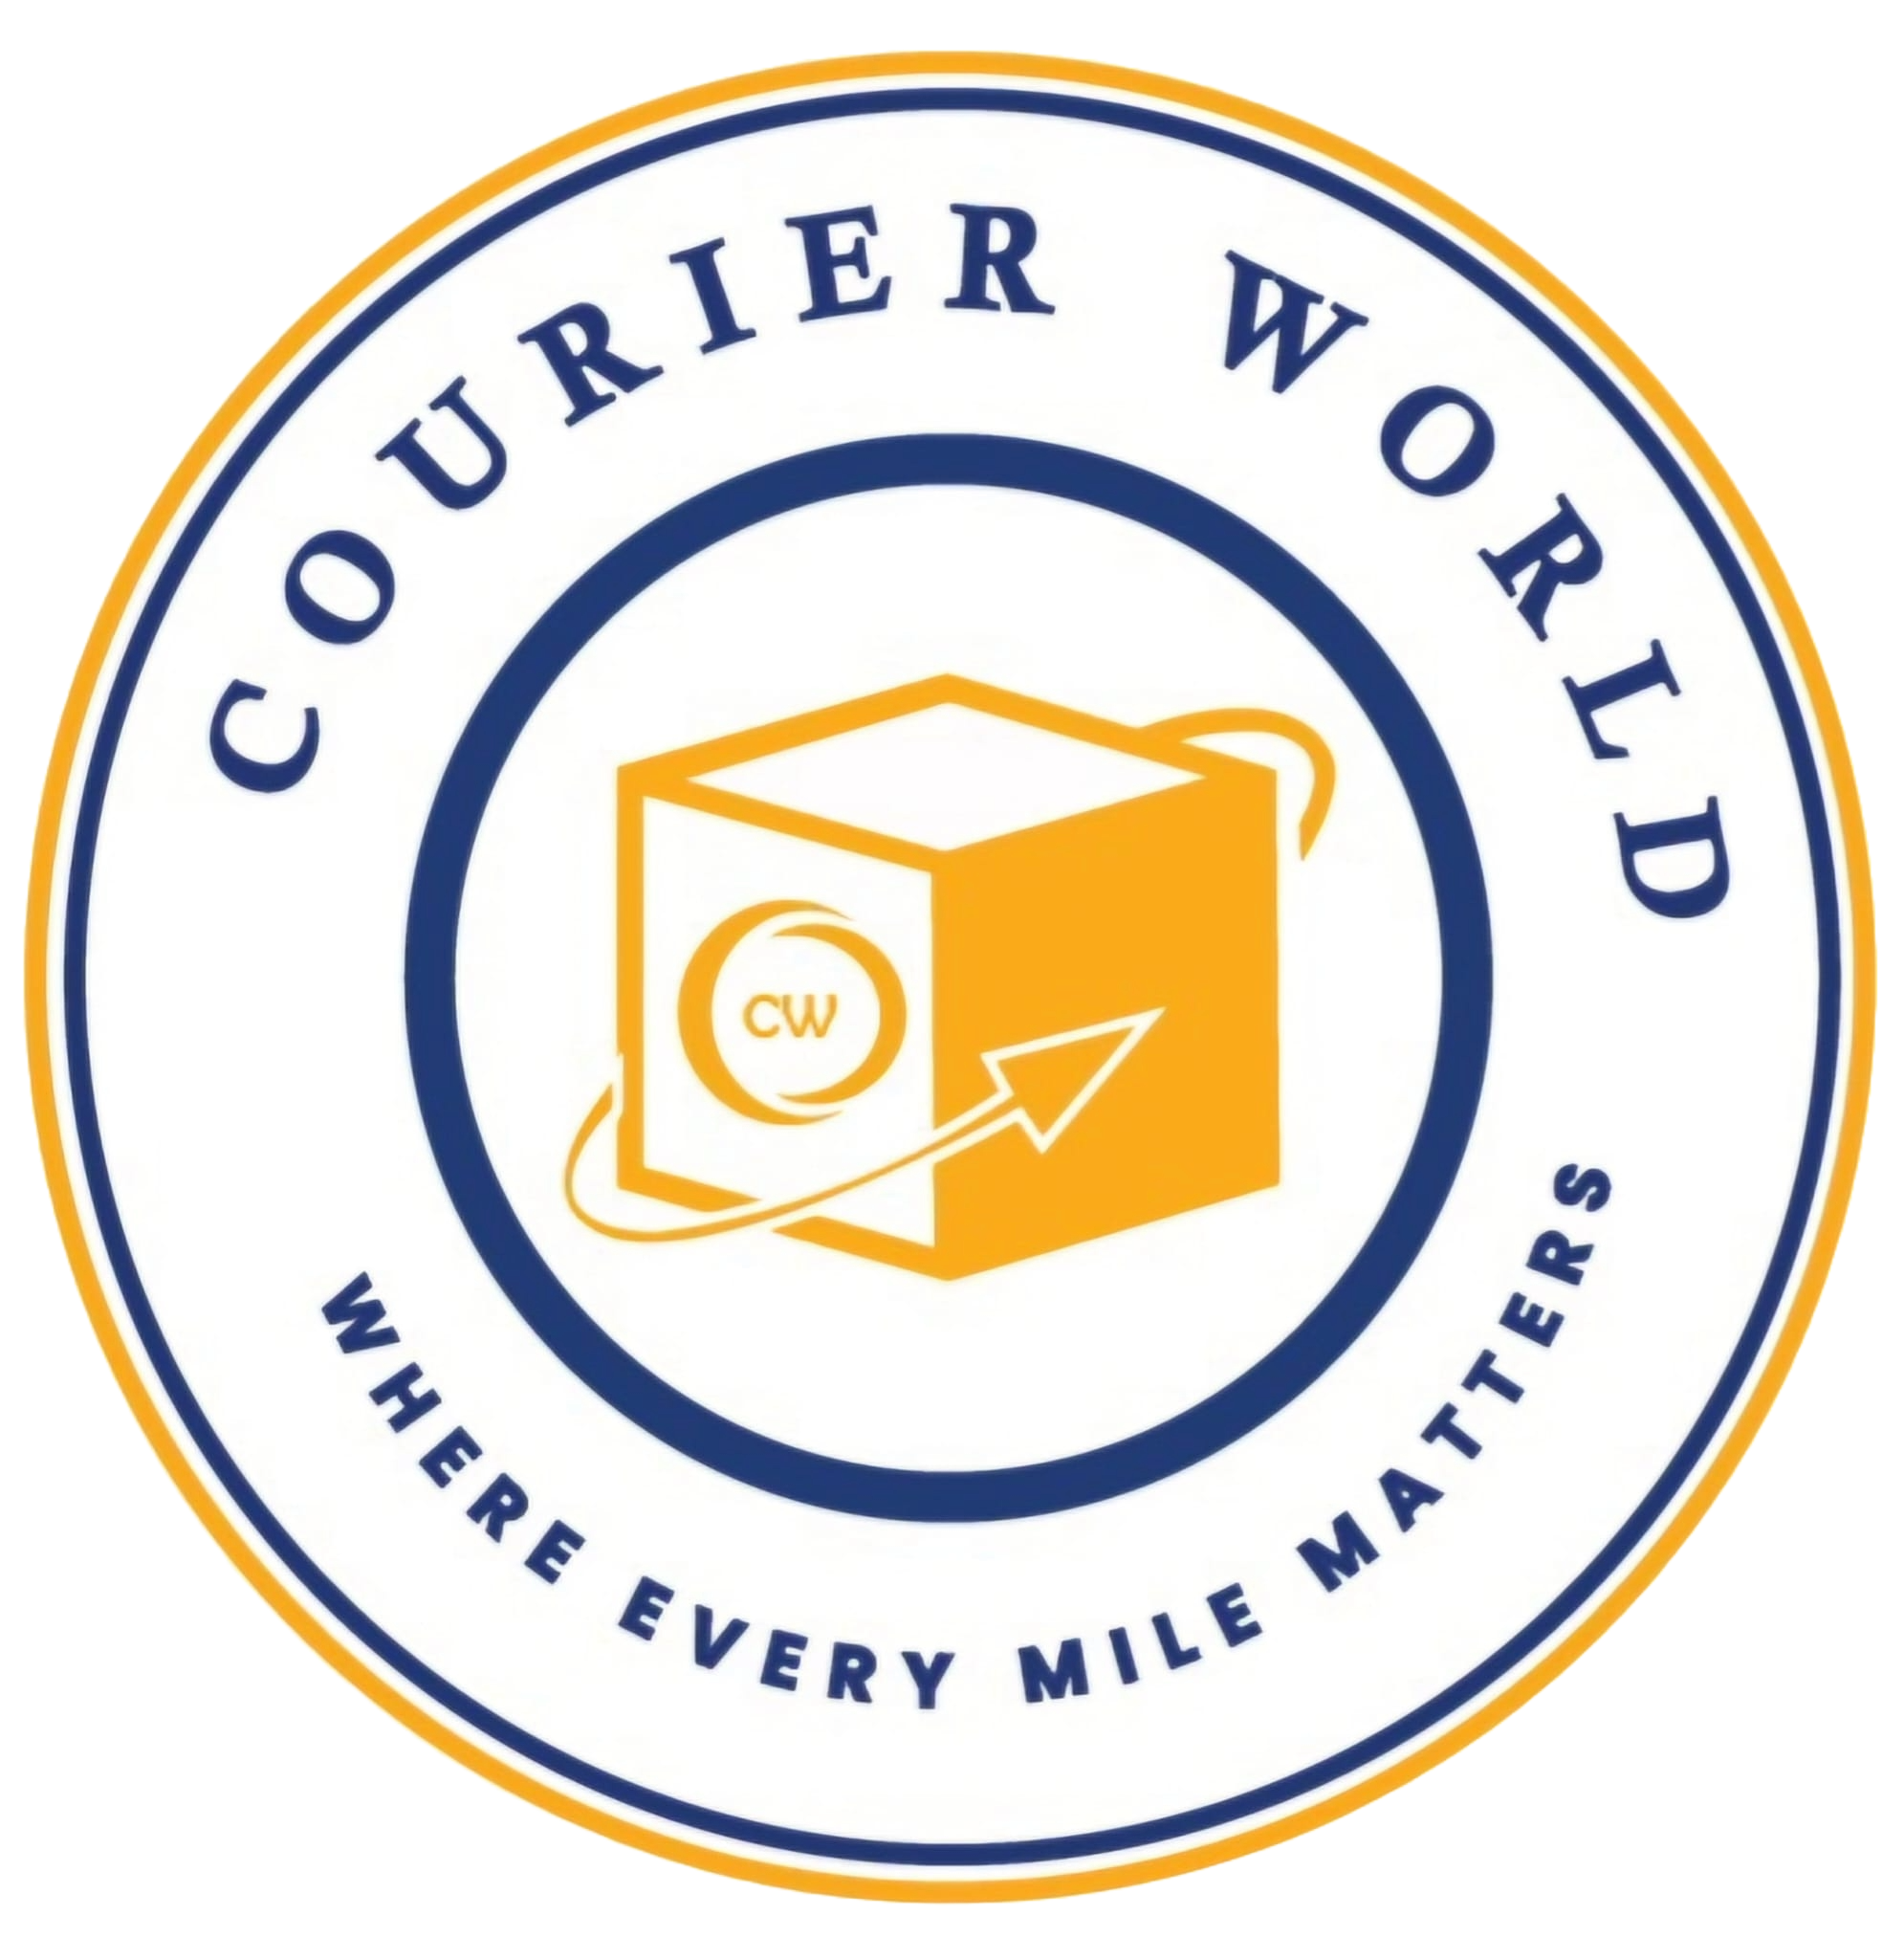 Courier World Logo